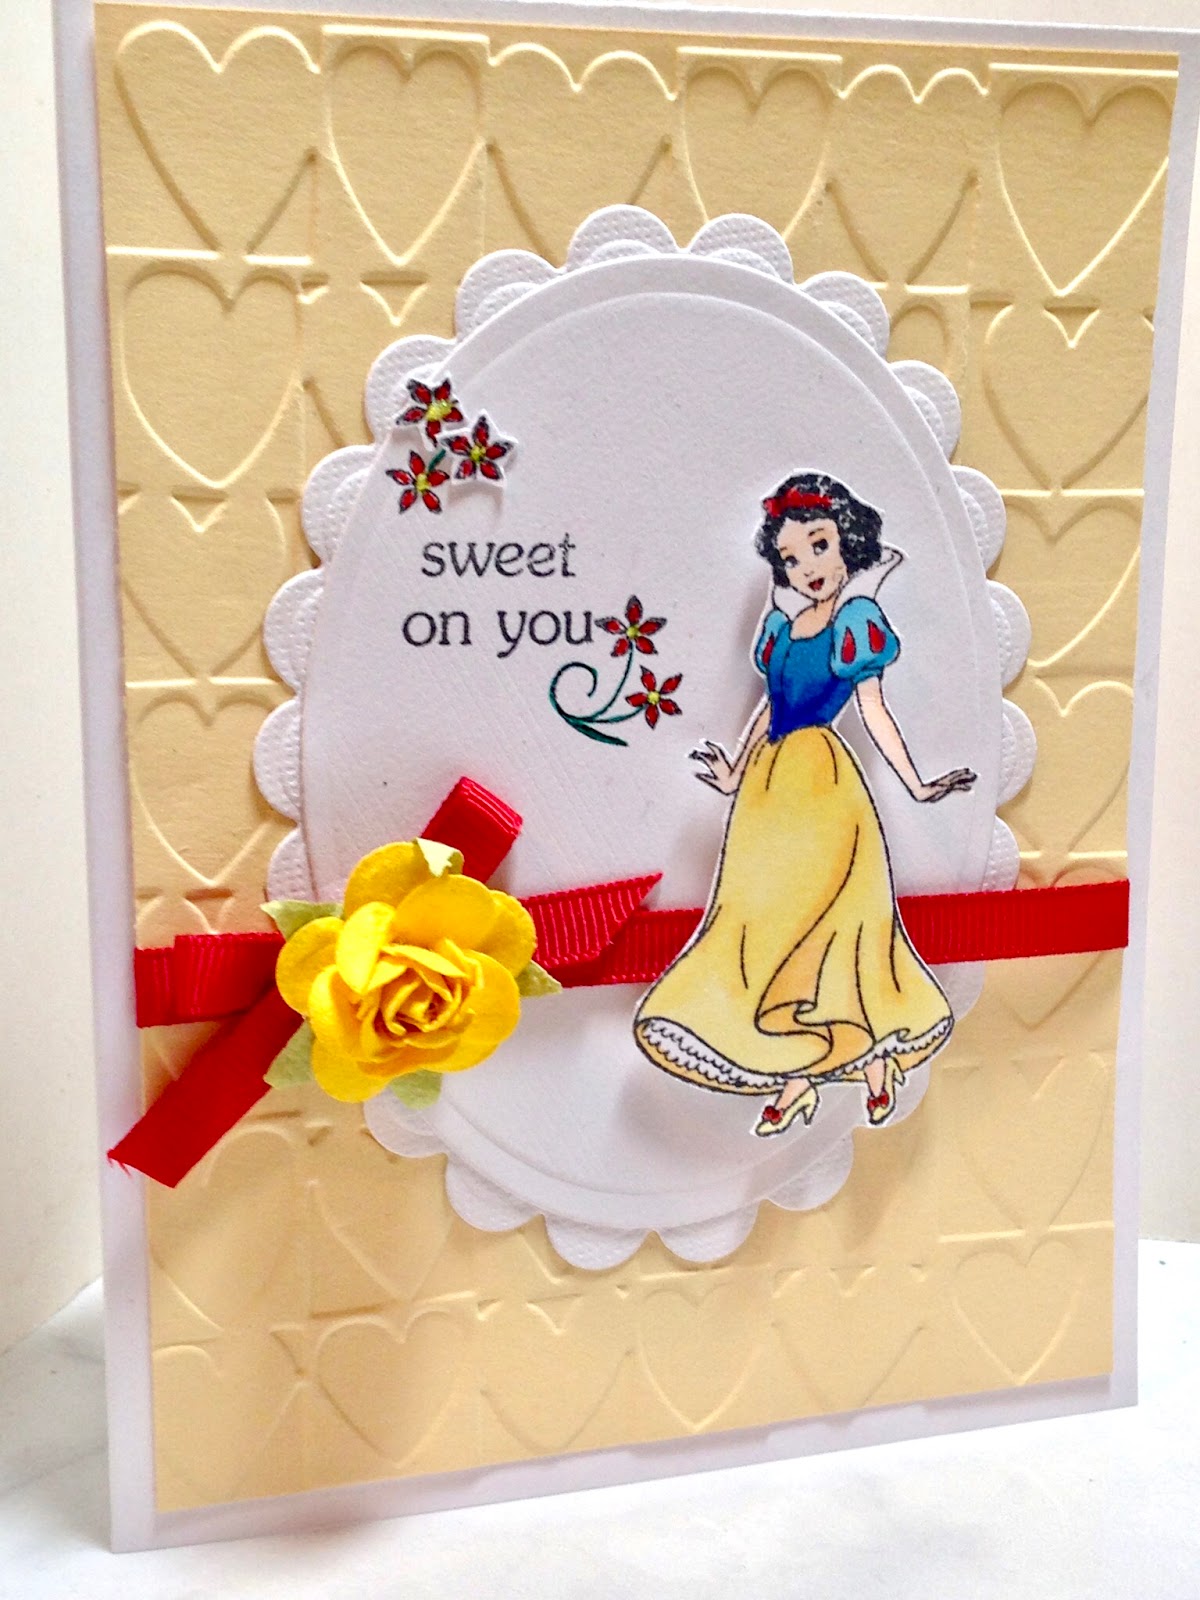 Amy's Creative Pursuits: A Handmade Disney Valentine and A Galentine Card